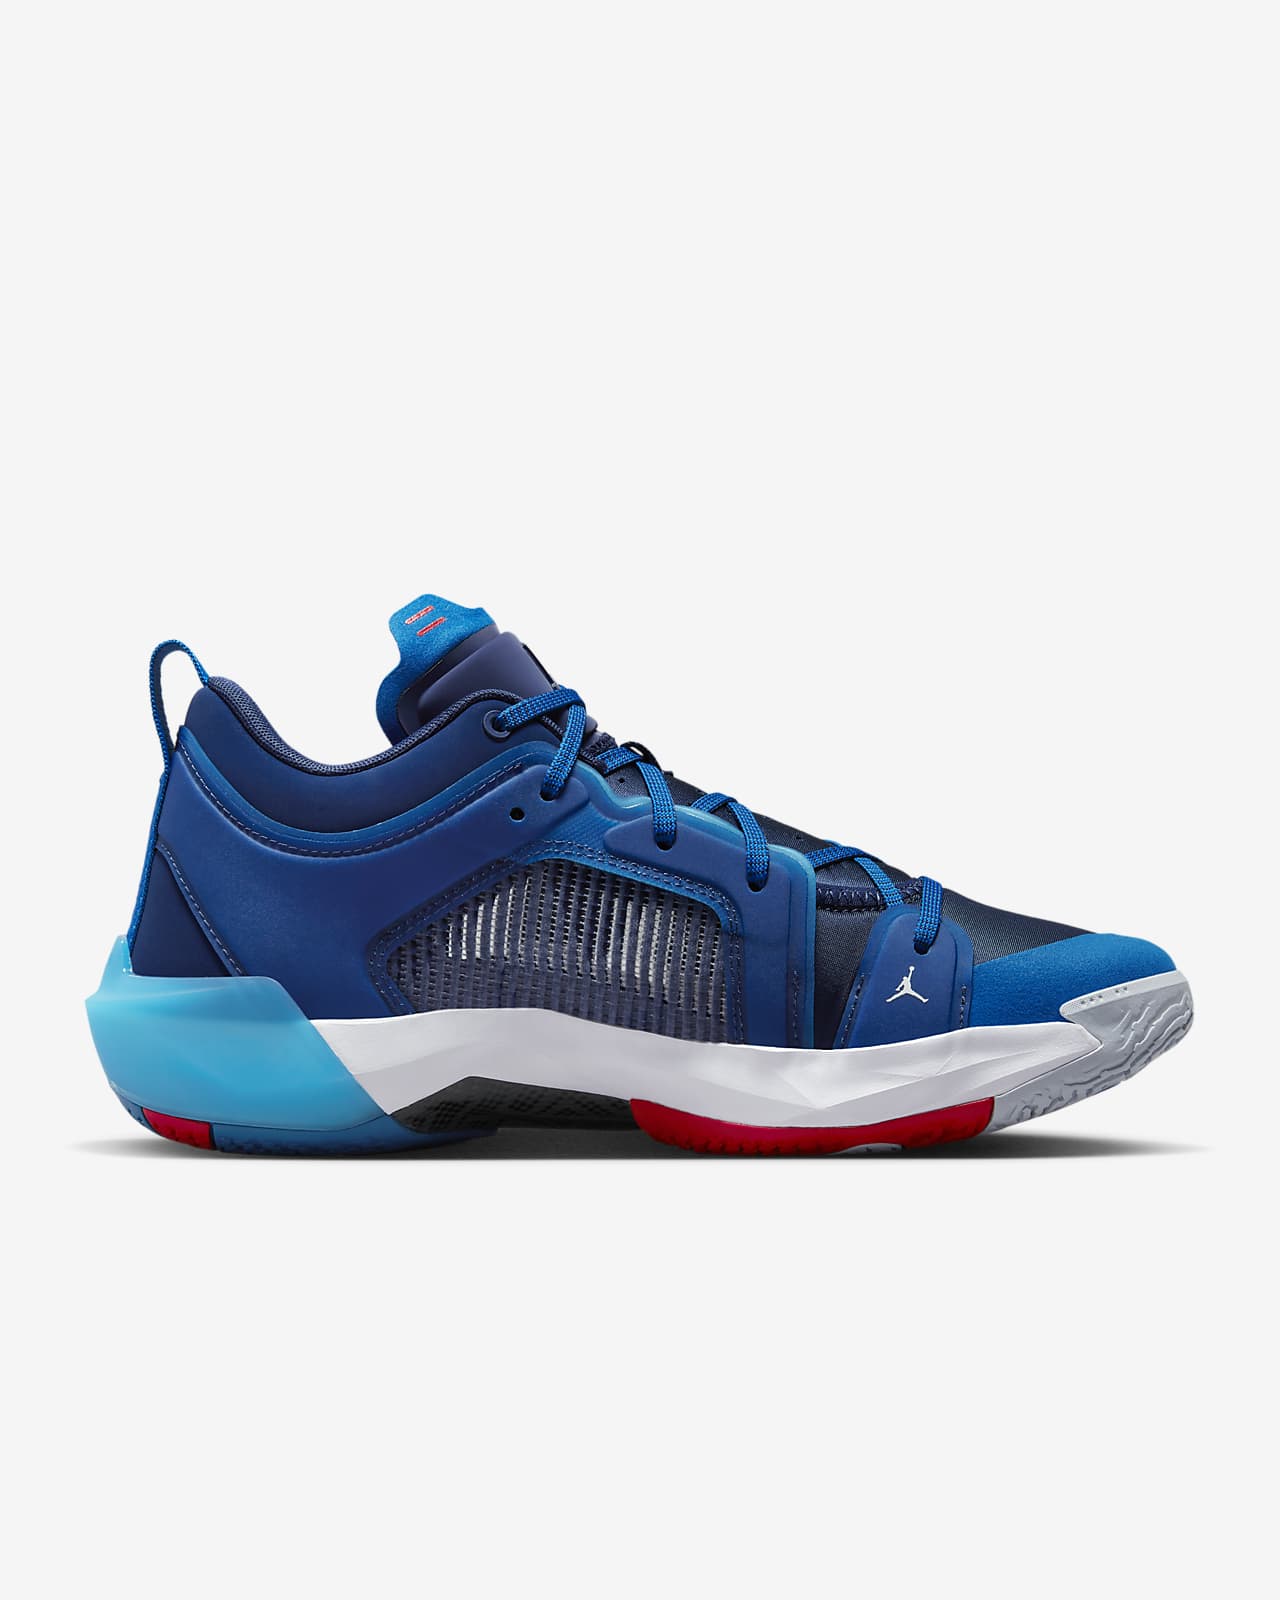 Air Jordan XXXVII Low Basketball Shoes. Nike LU